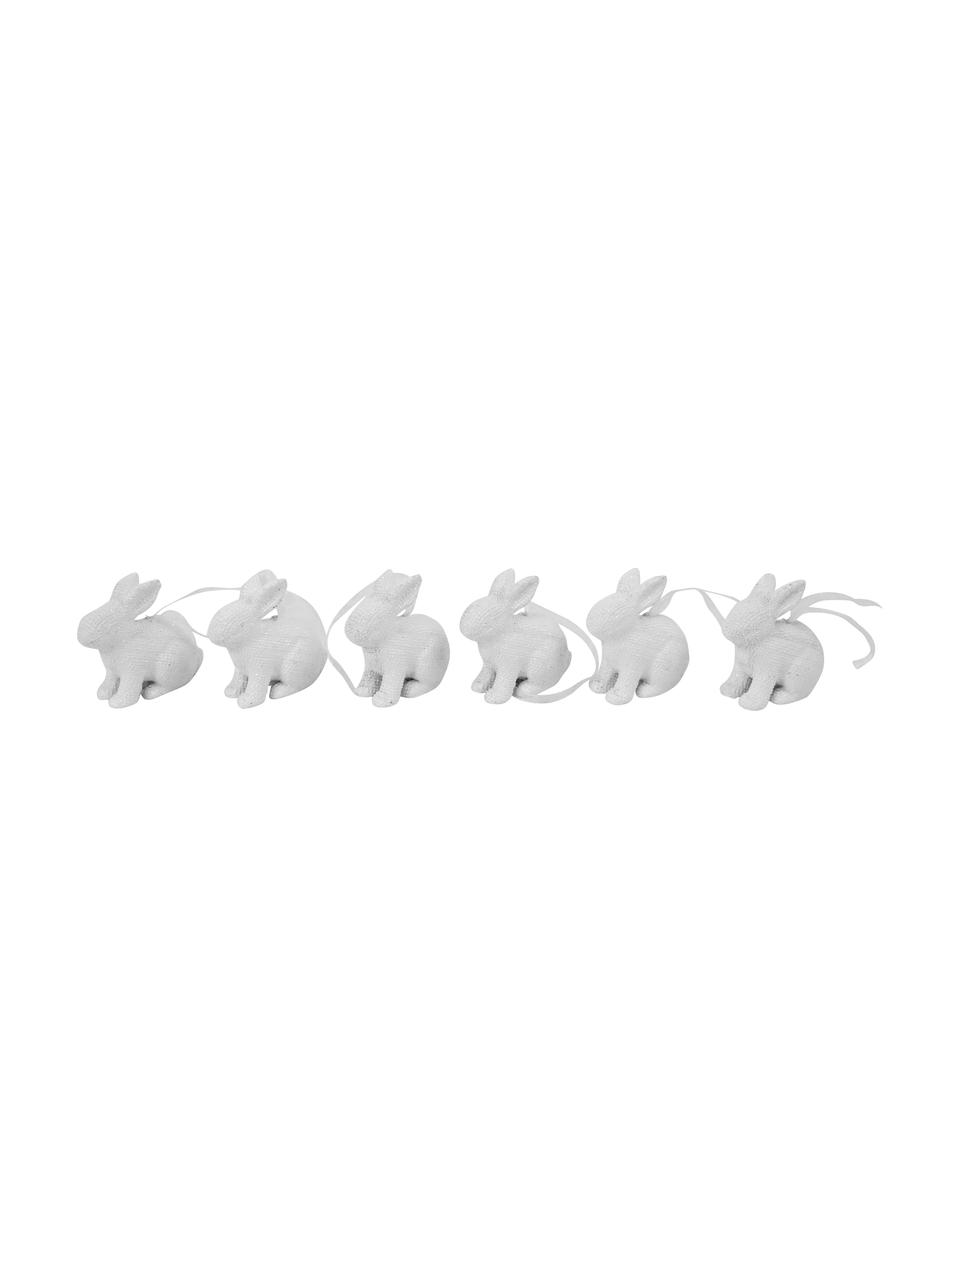 Mini paashazen Pailletti in wit, 6 stuks, Kunsthars, Wit, B 5 x H 6 cm